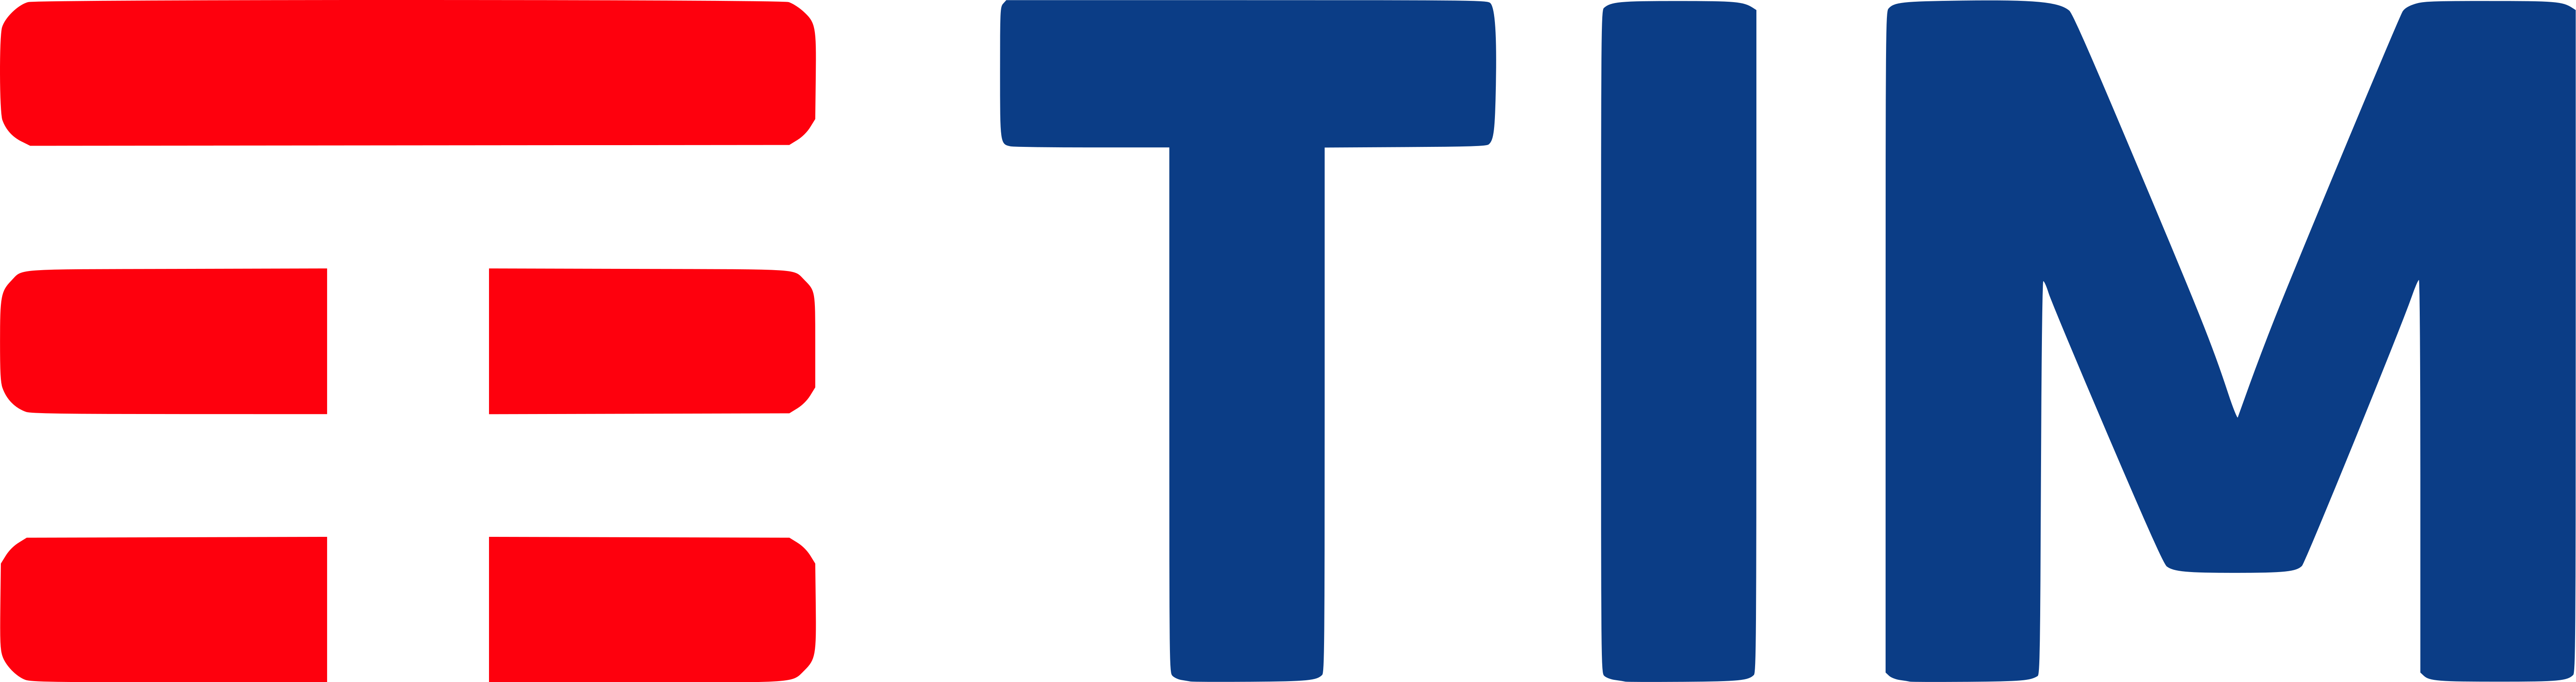 Logotipo da empresa TIM